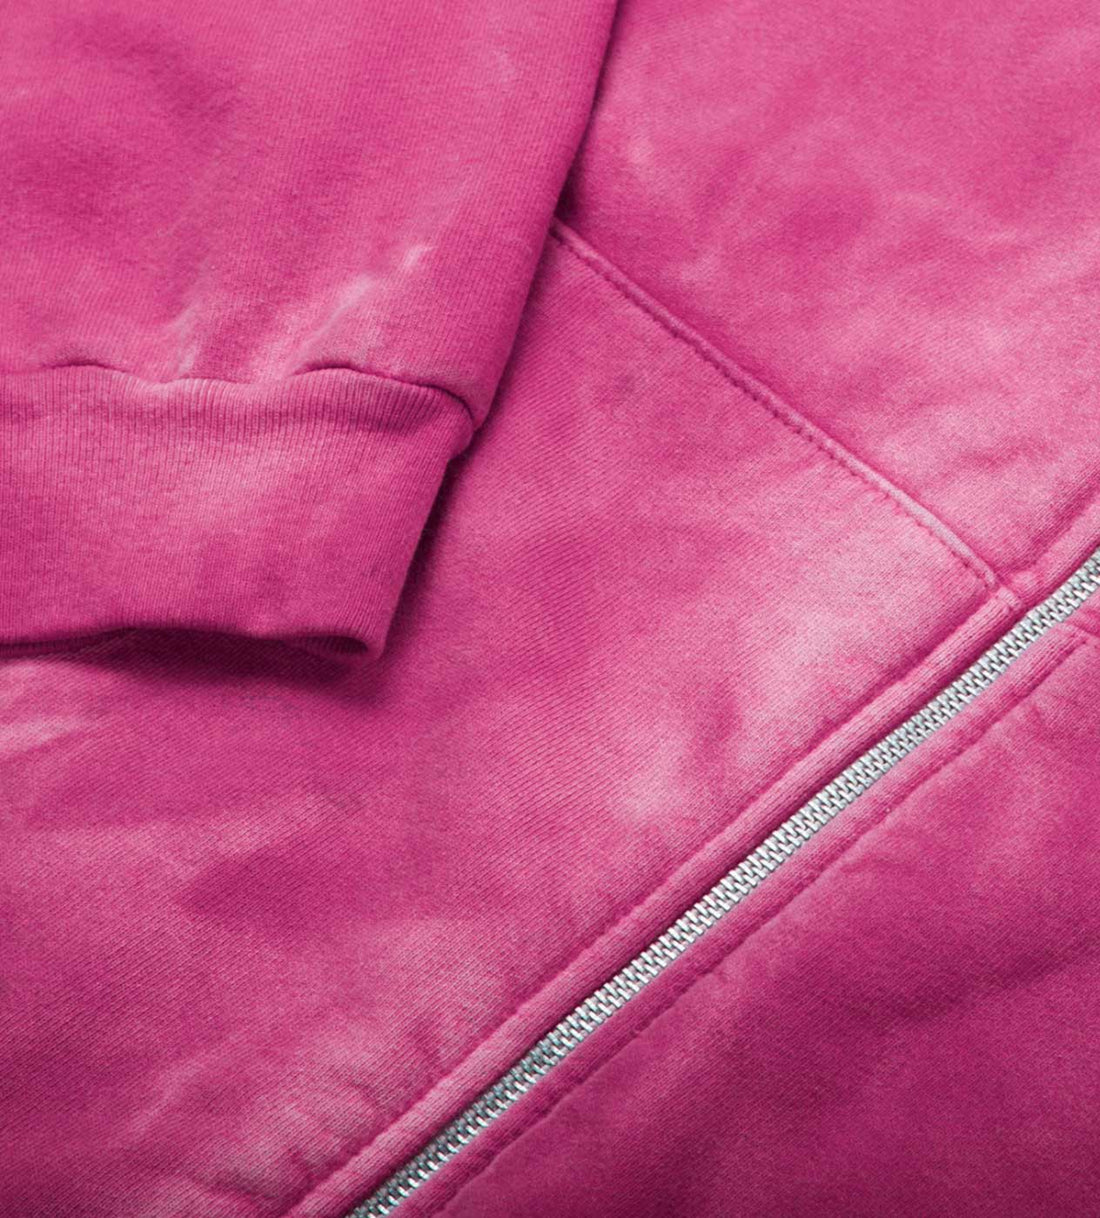 Product Image Of Pieces Sun Faded Zip Up Sweatshirt Midnight Pink Zipper View